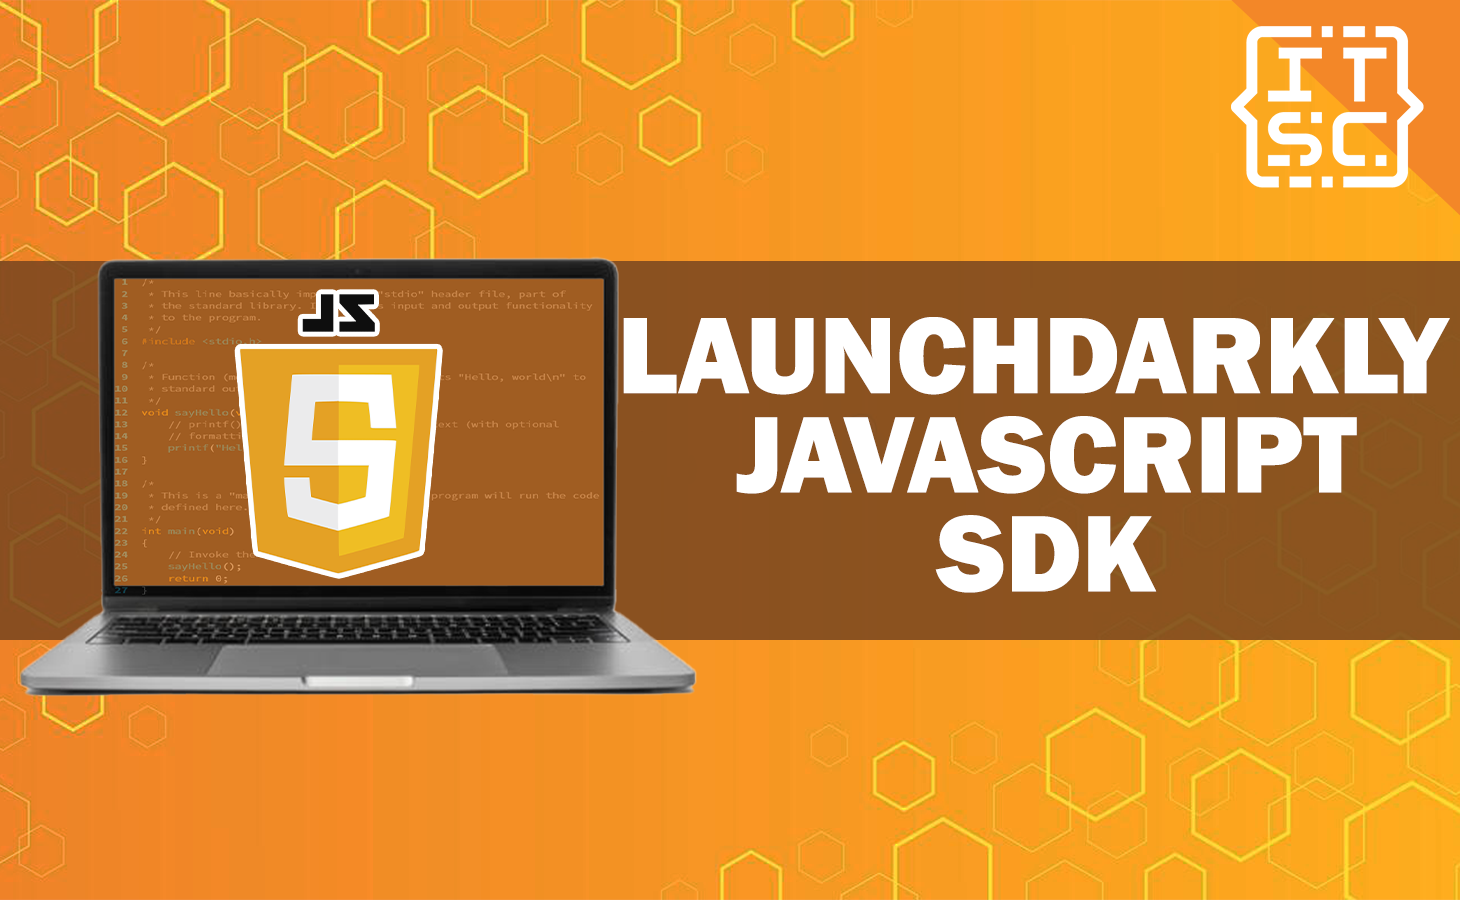 LaunchDarkly JavaScript SDK